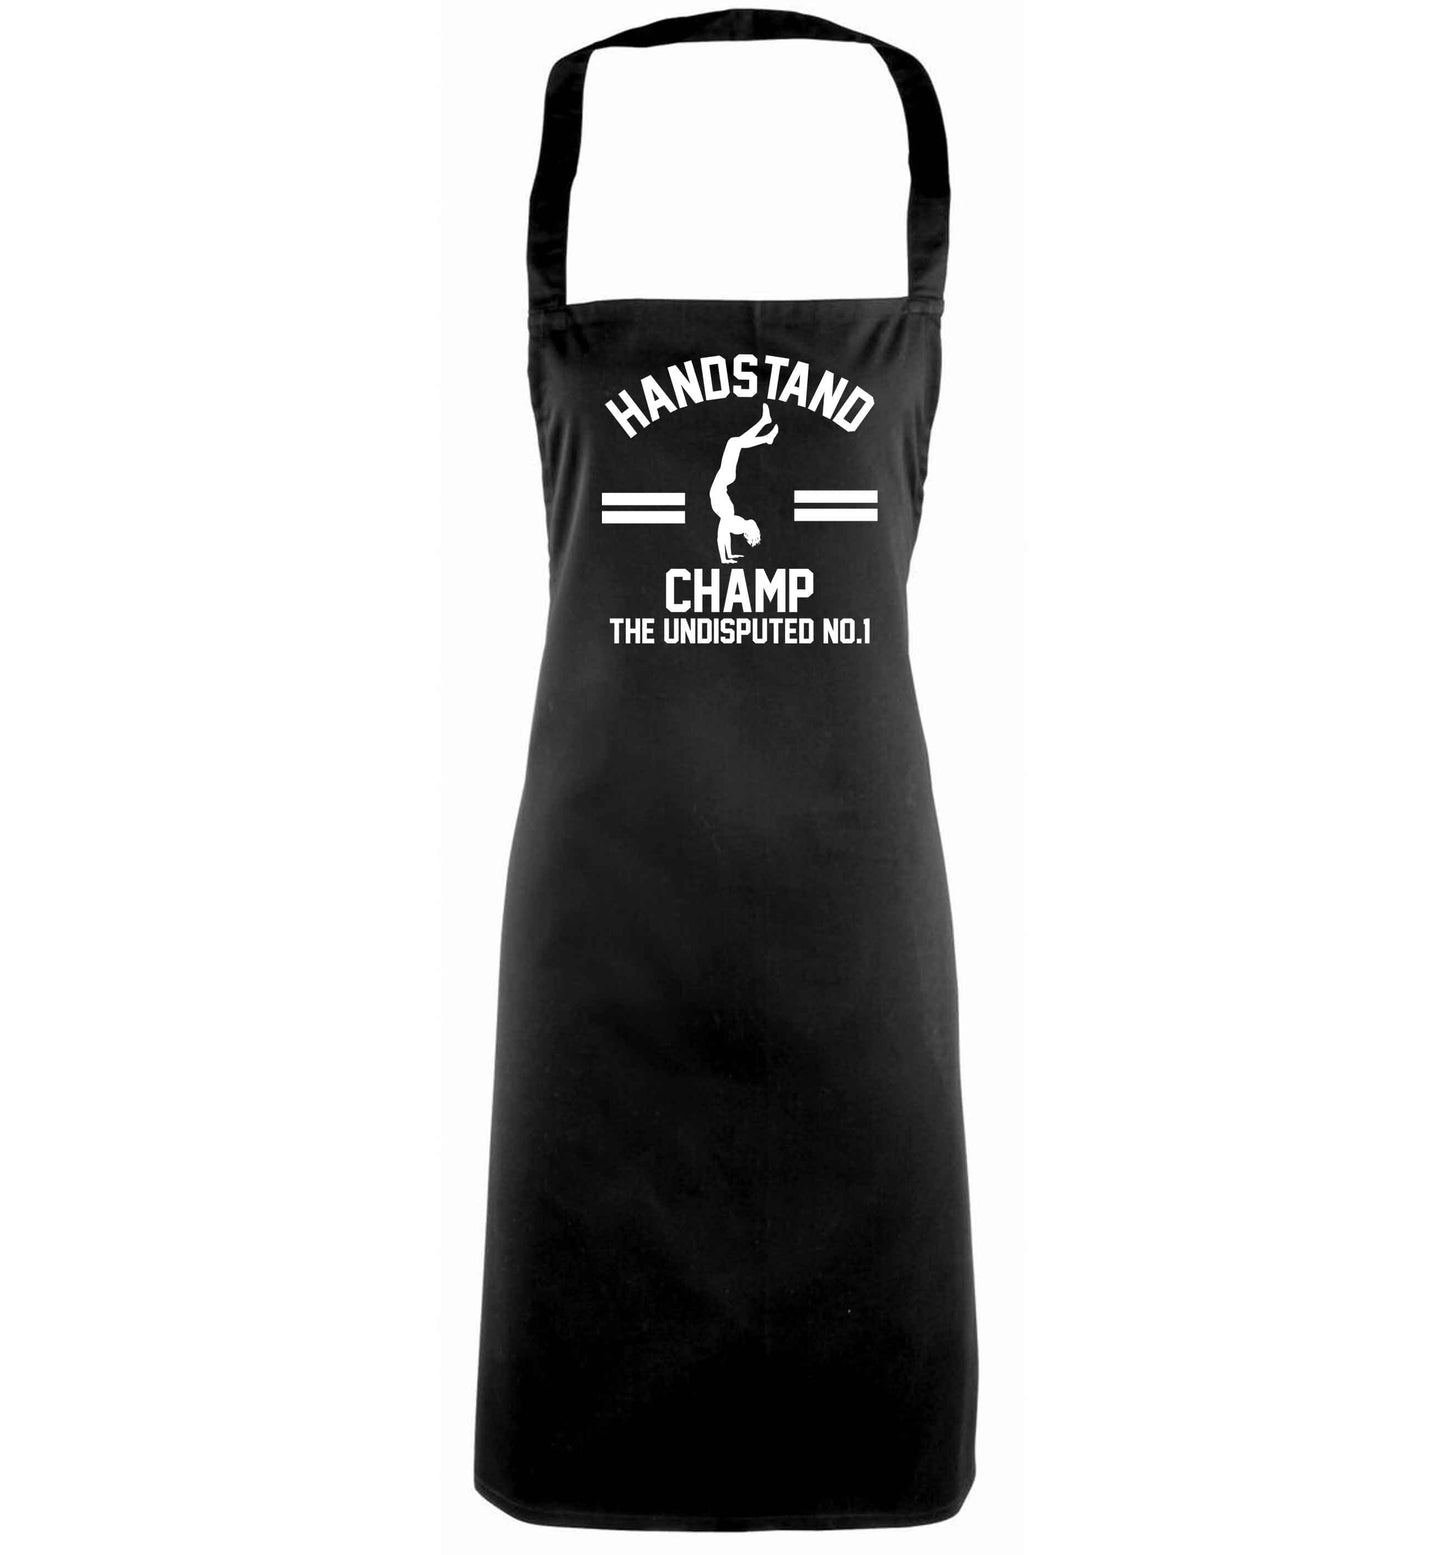 Undisputed handstand championship no.1  black apron